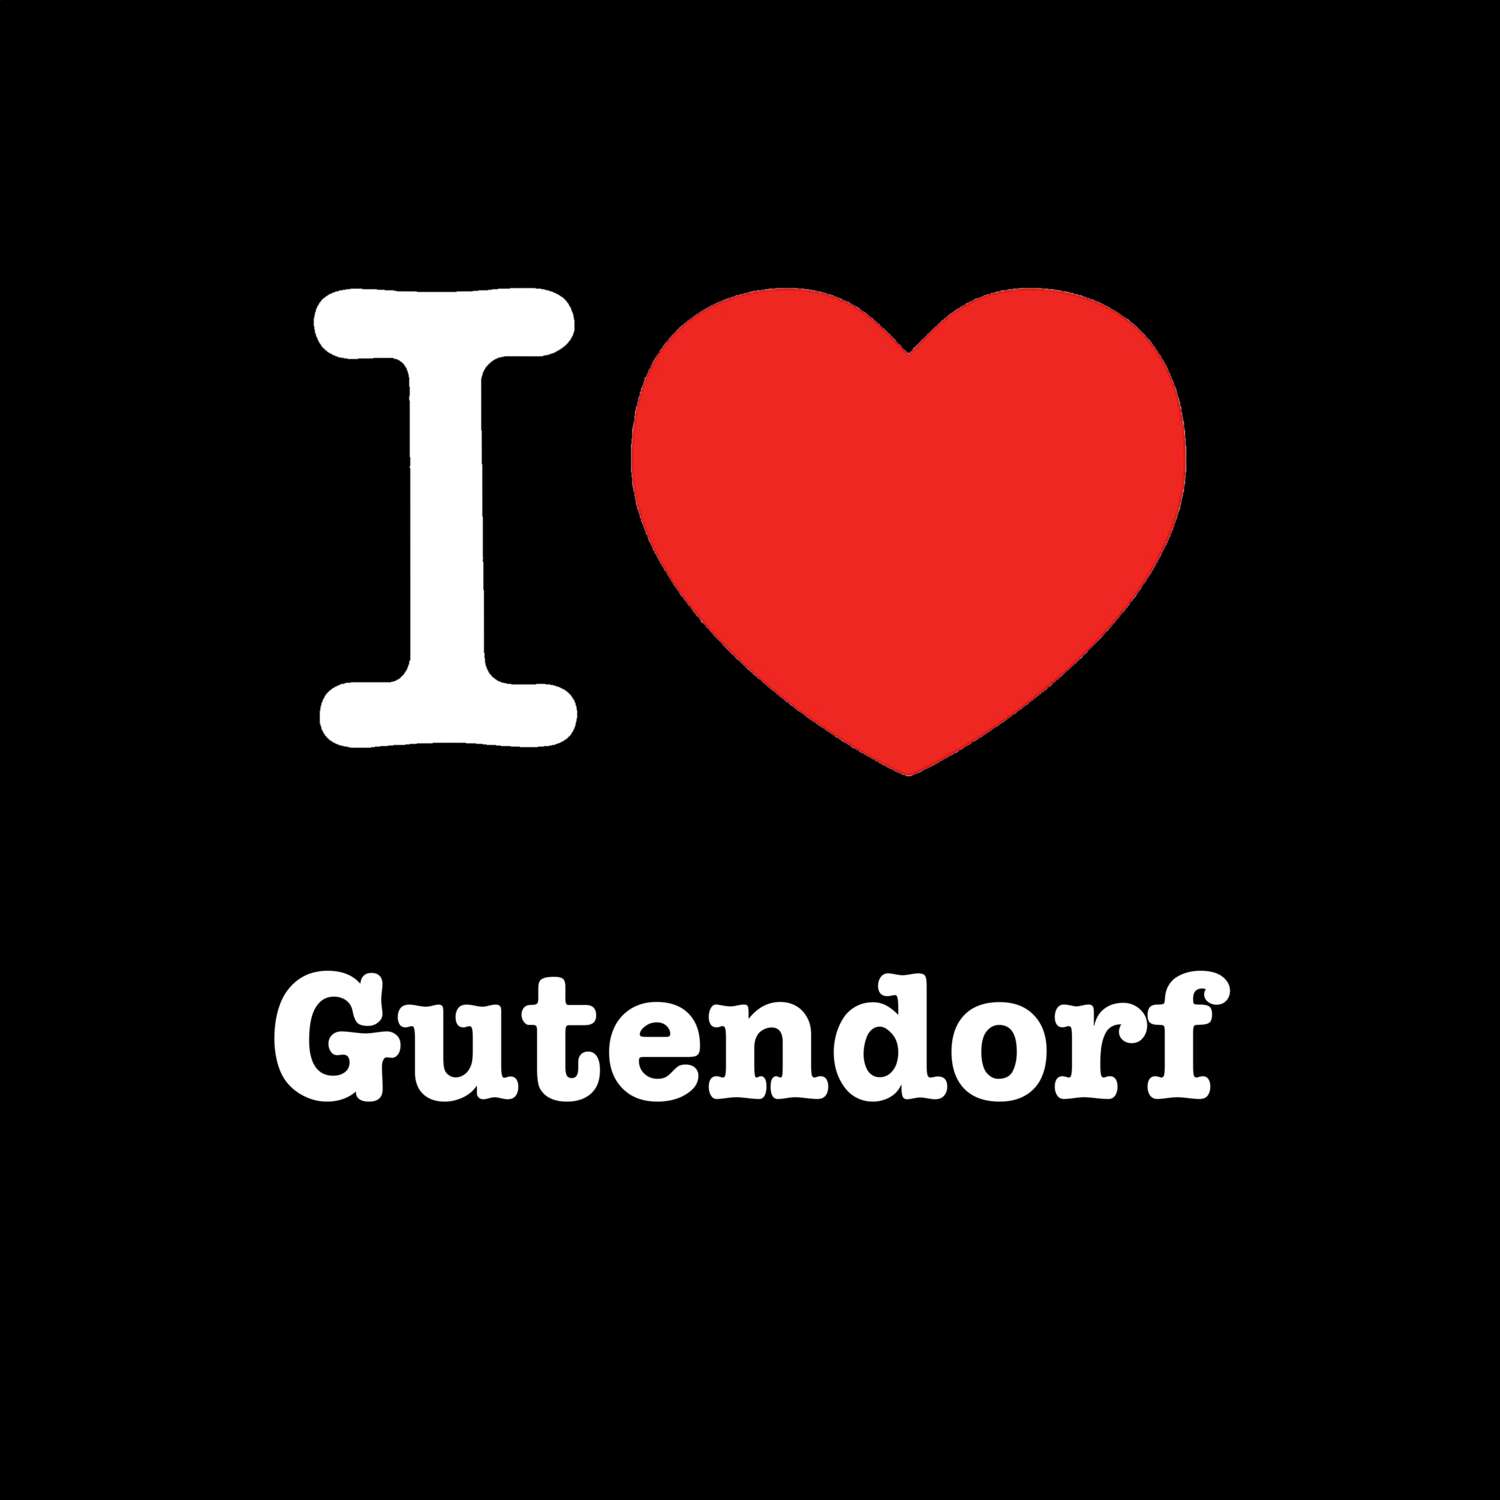 Gutendorf T-Shirt »I love«